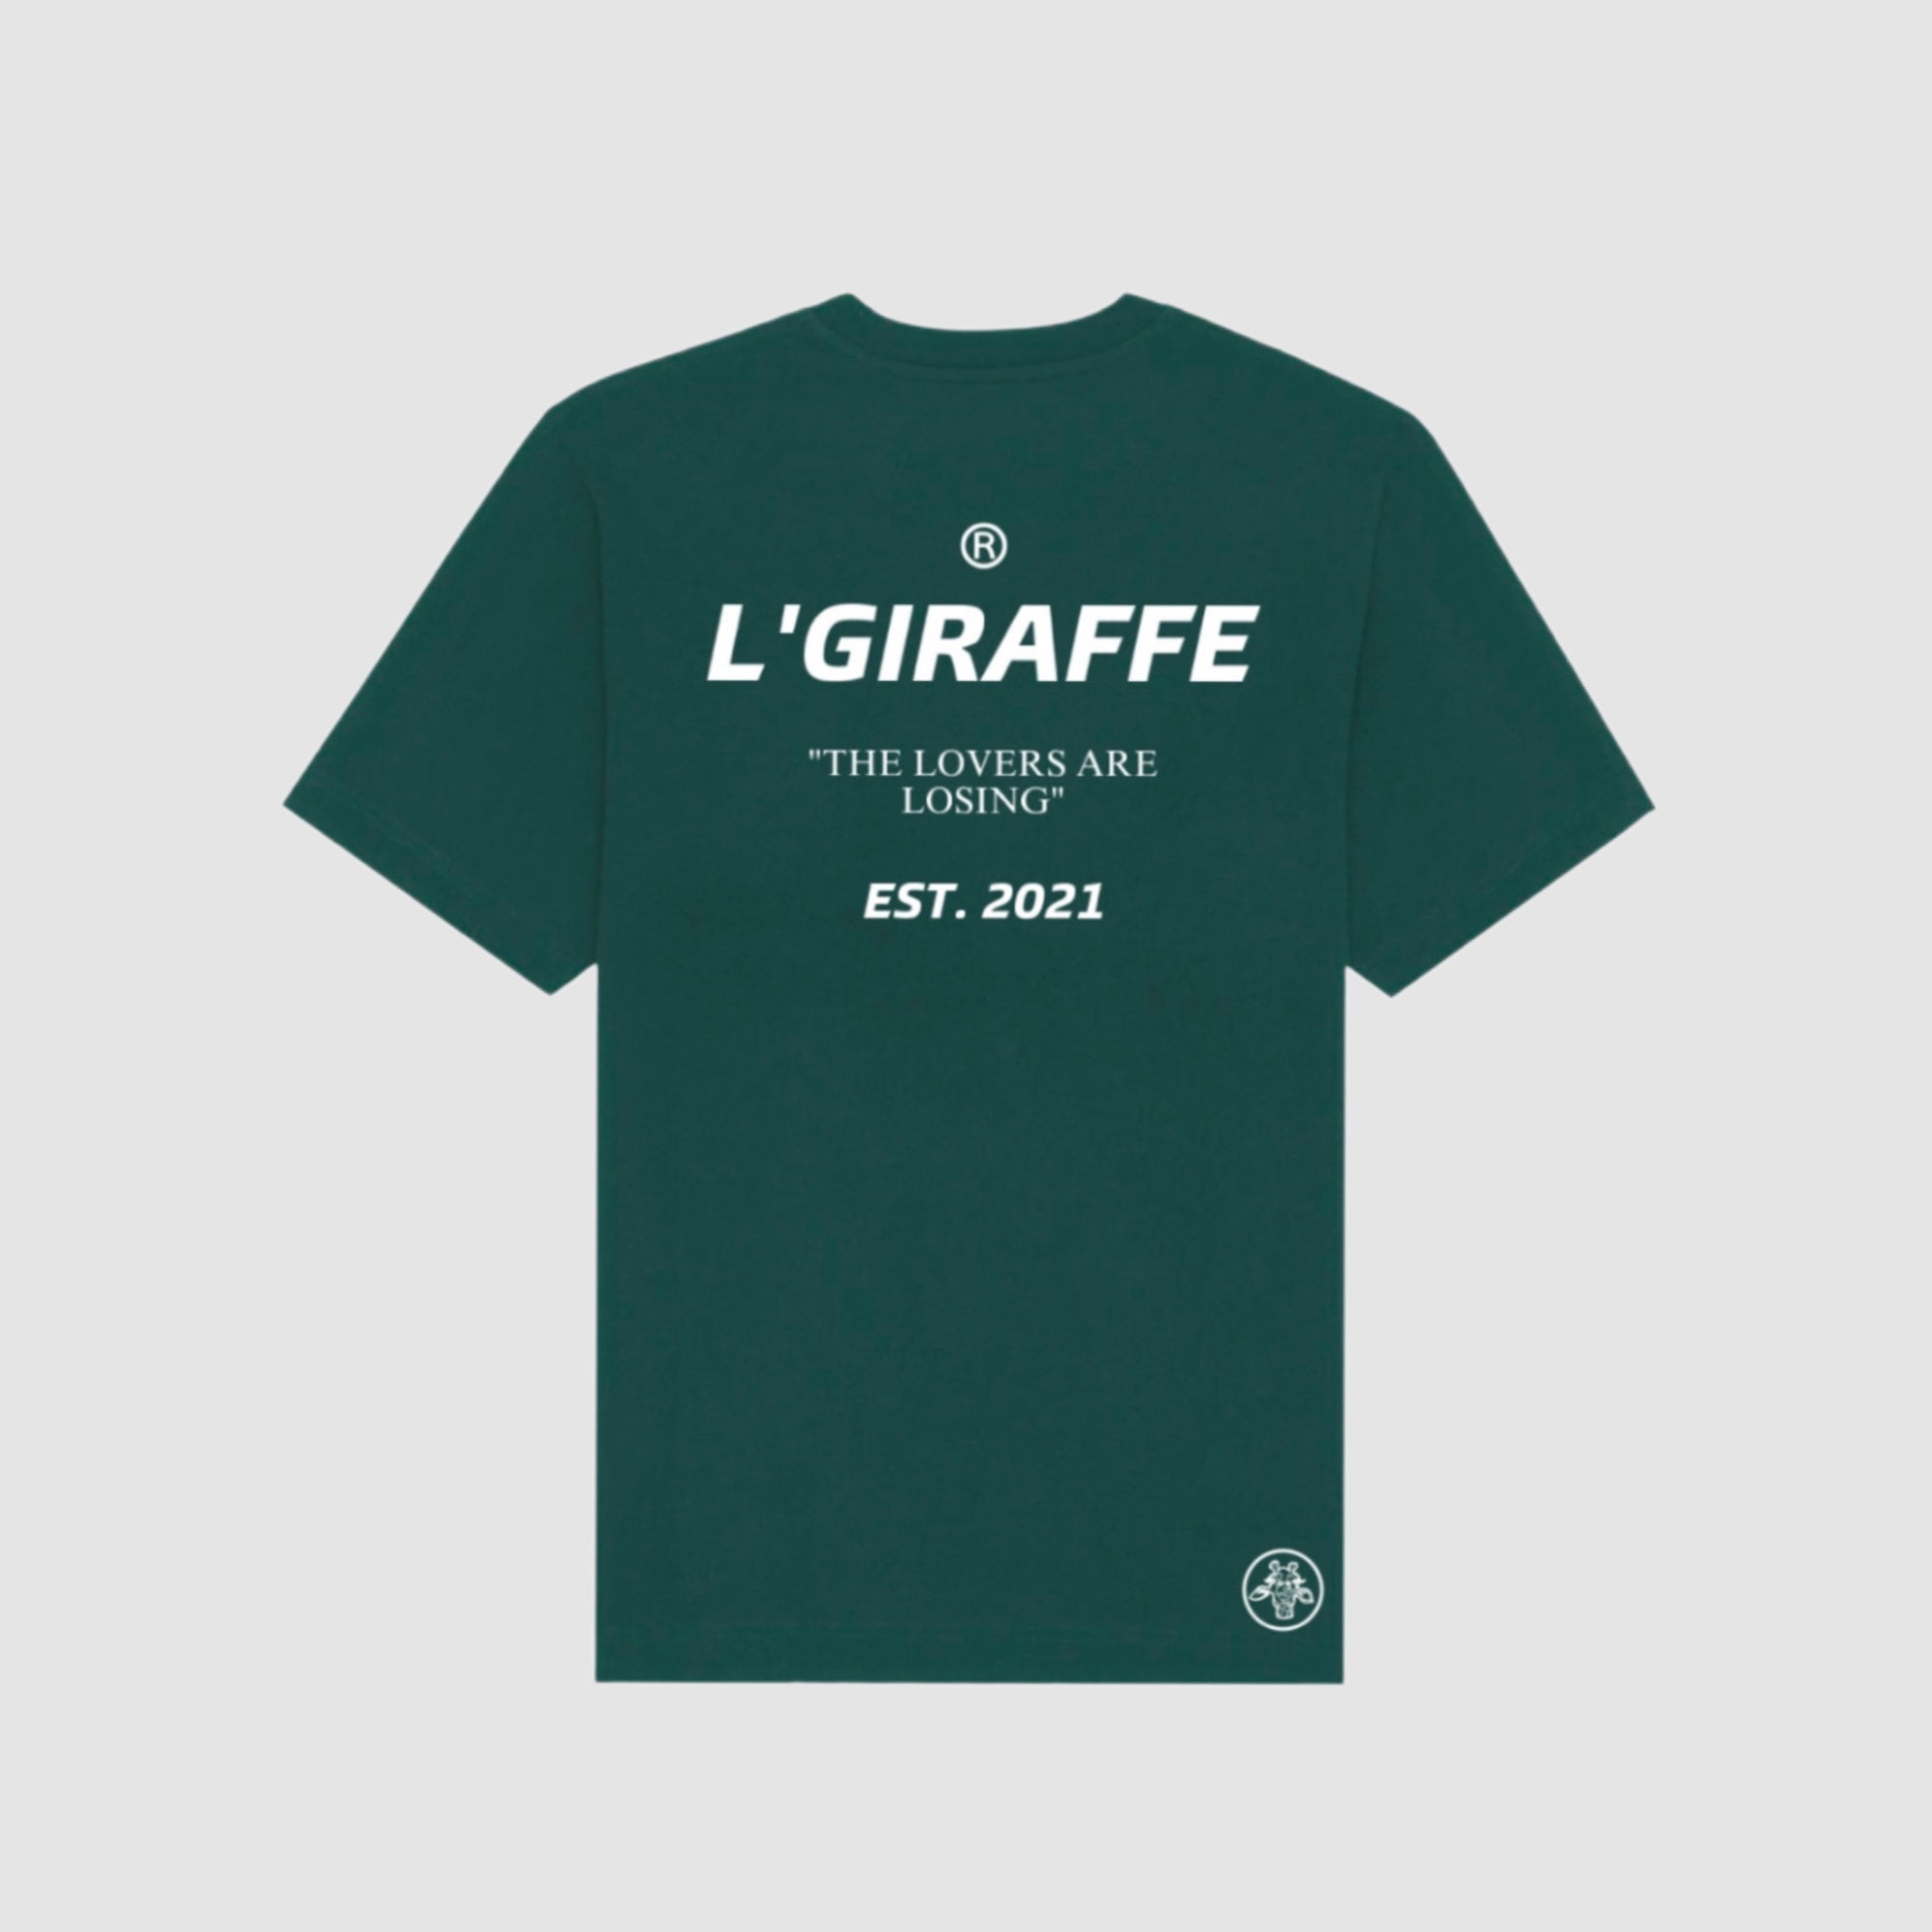 GLAZED GREEN-WHITE "ÉLITE" TEE - LGIRAFFE